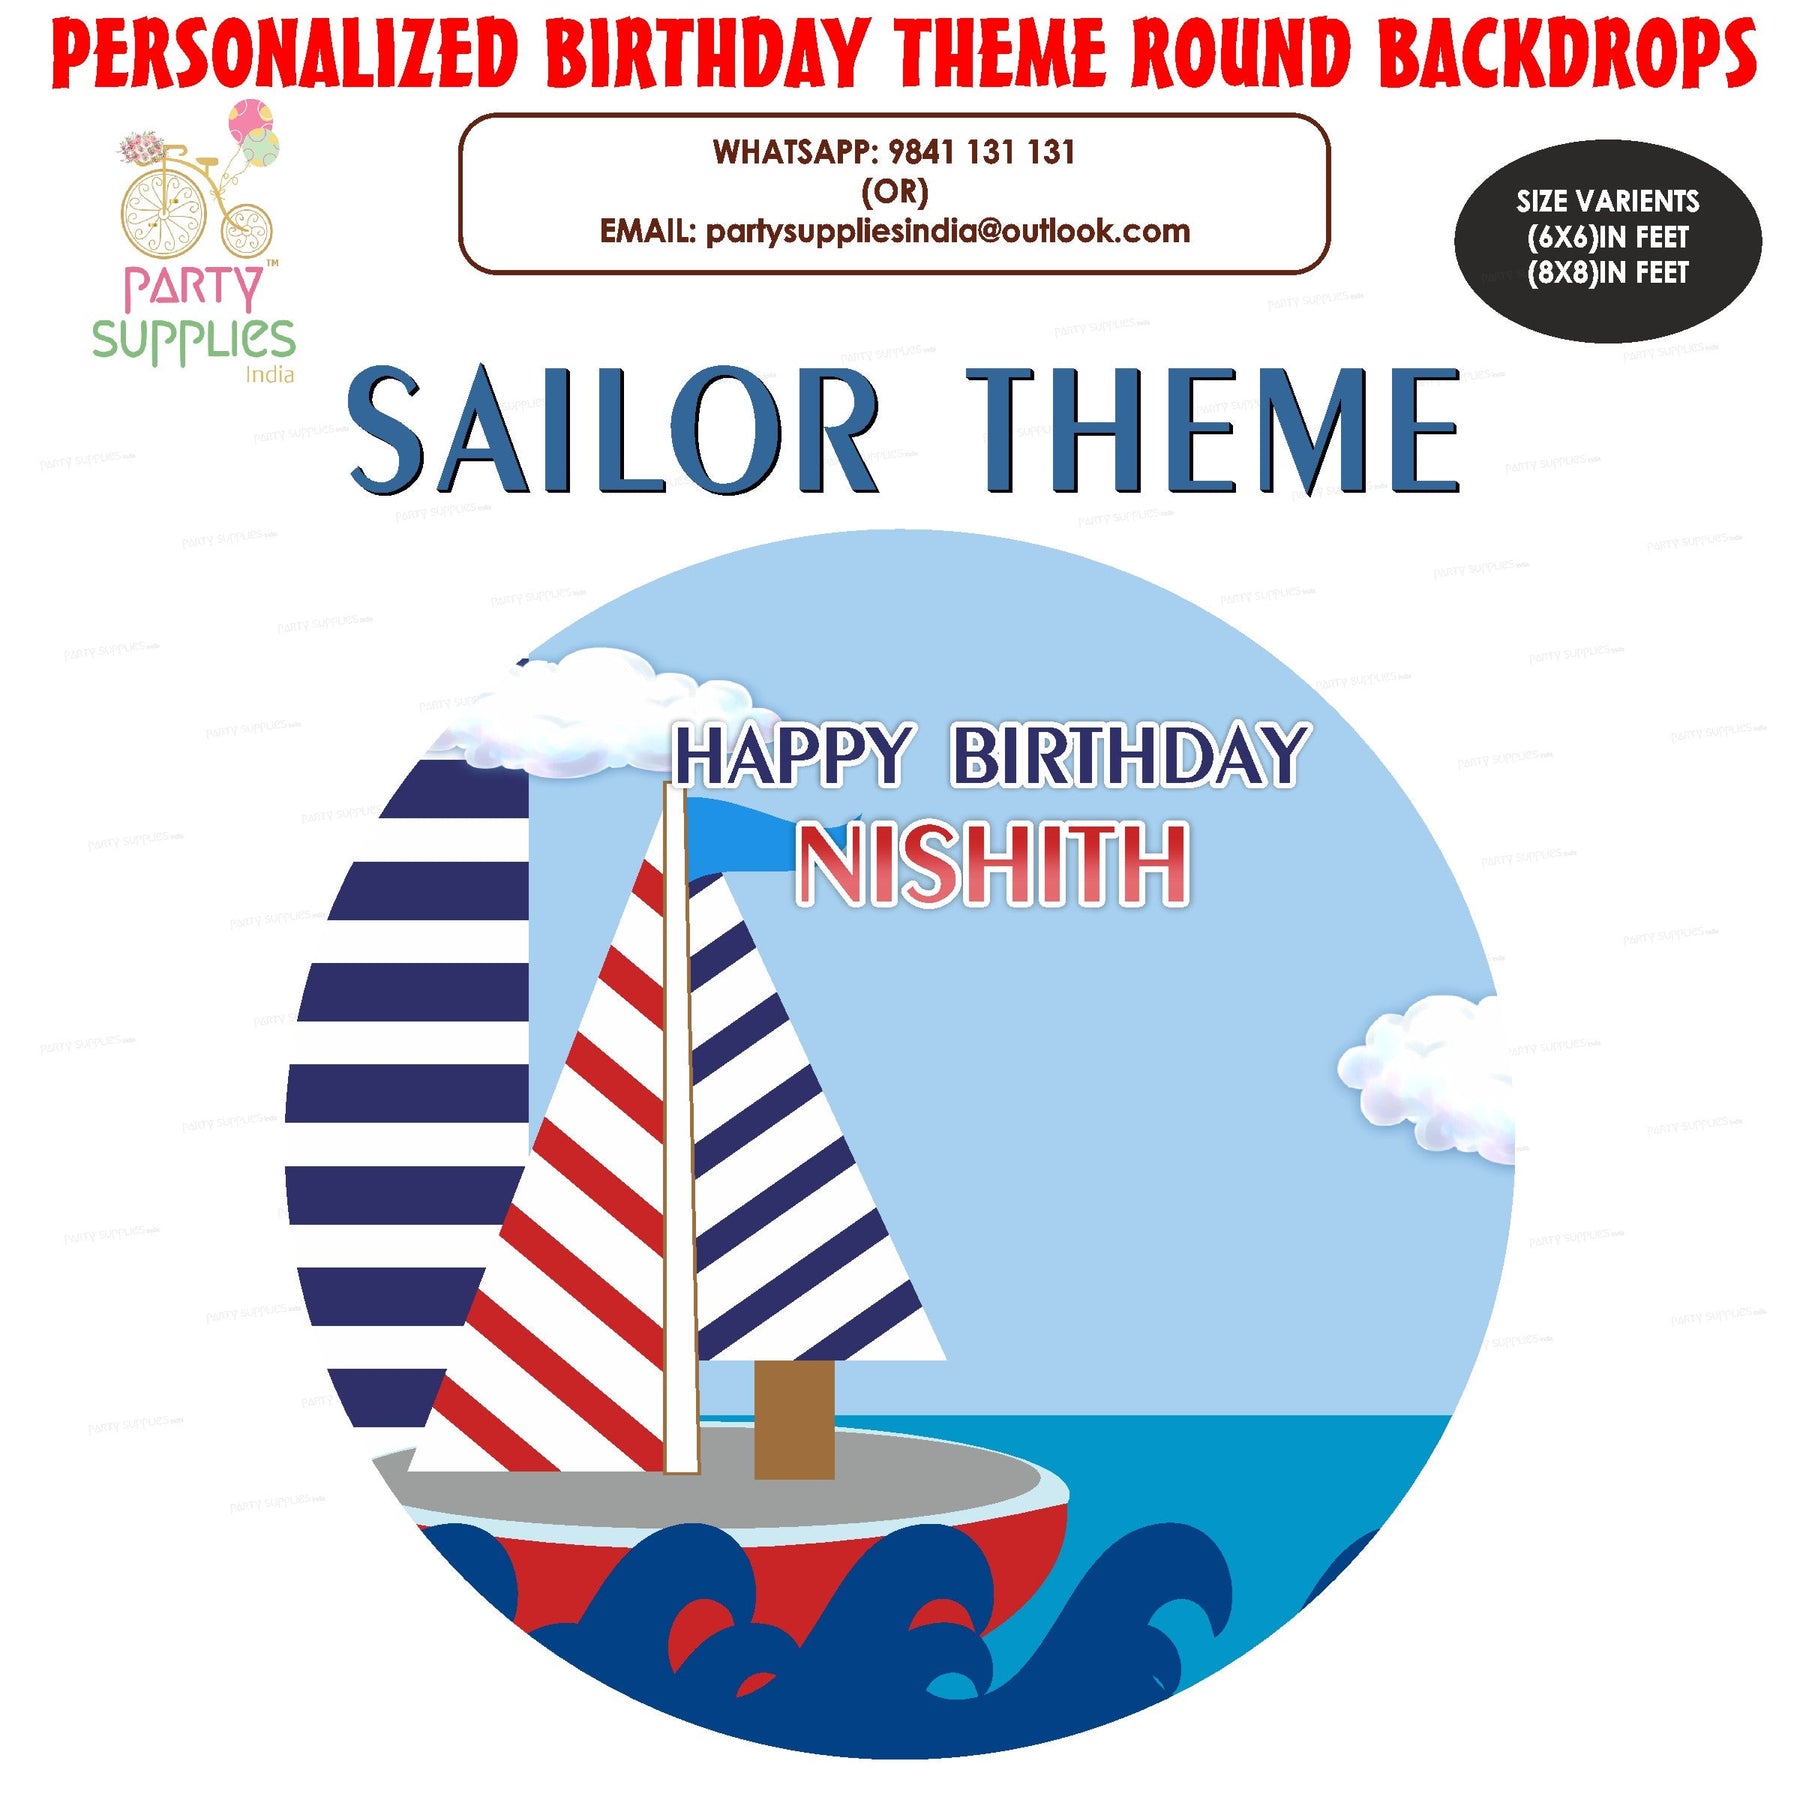 PSI Sailor Theme Customized Round Backdrop